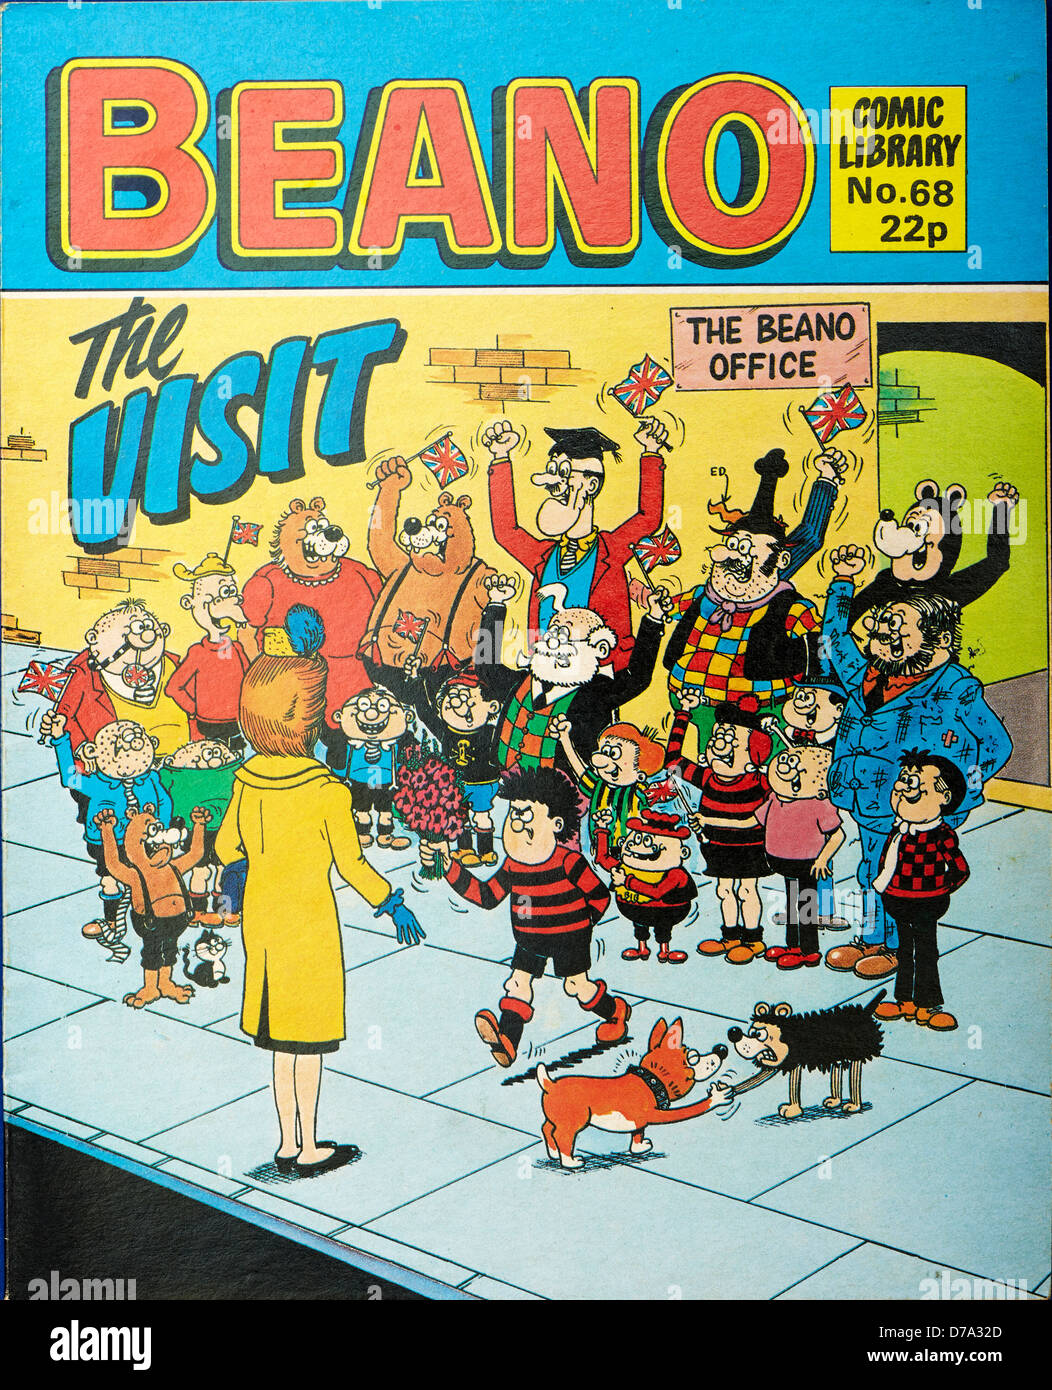 Das Beano Comic-Magazin (Comic-Bibliothek) Stockfoto